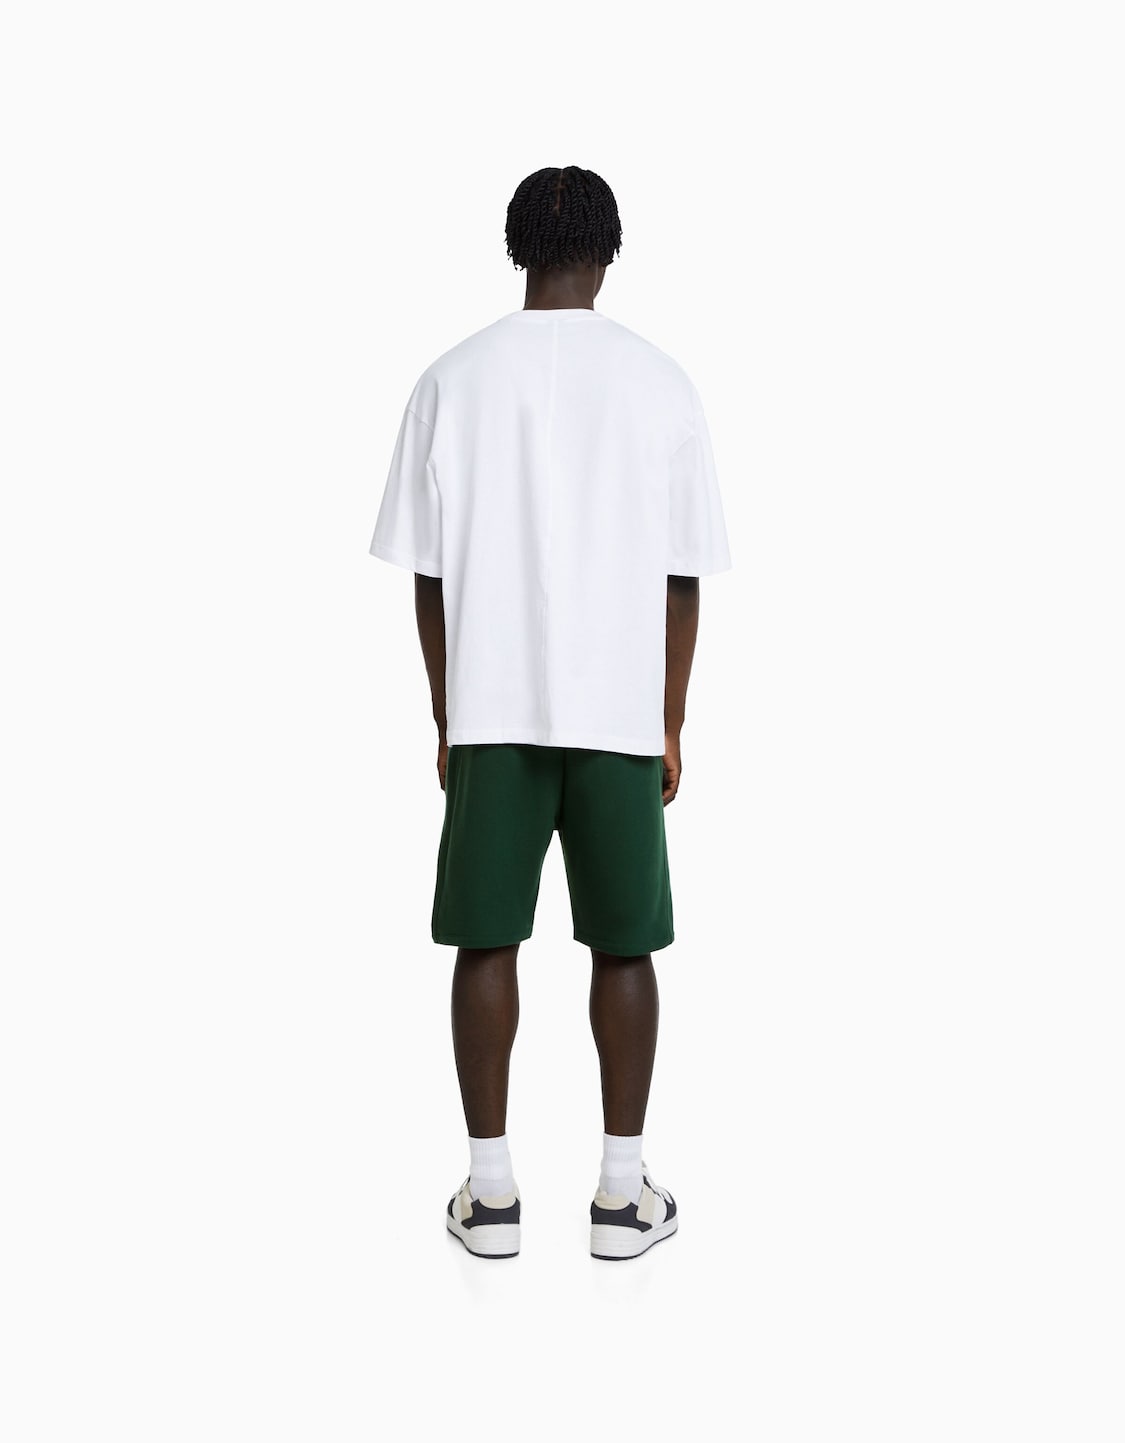 J Hart & Bros shorts in green